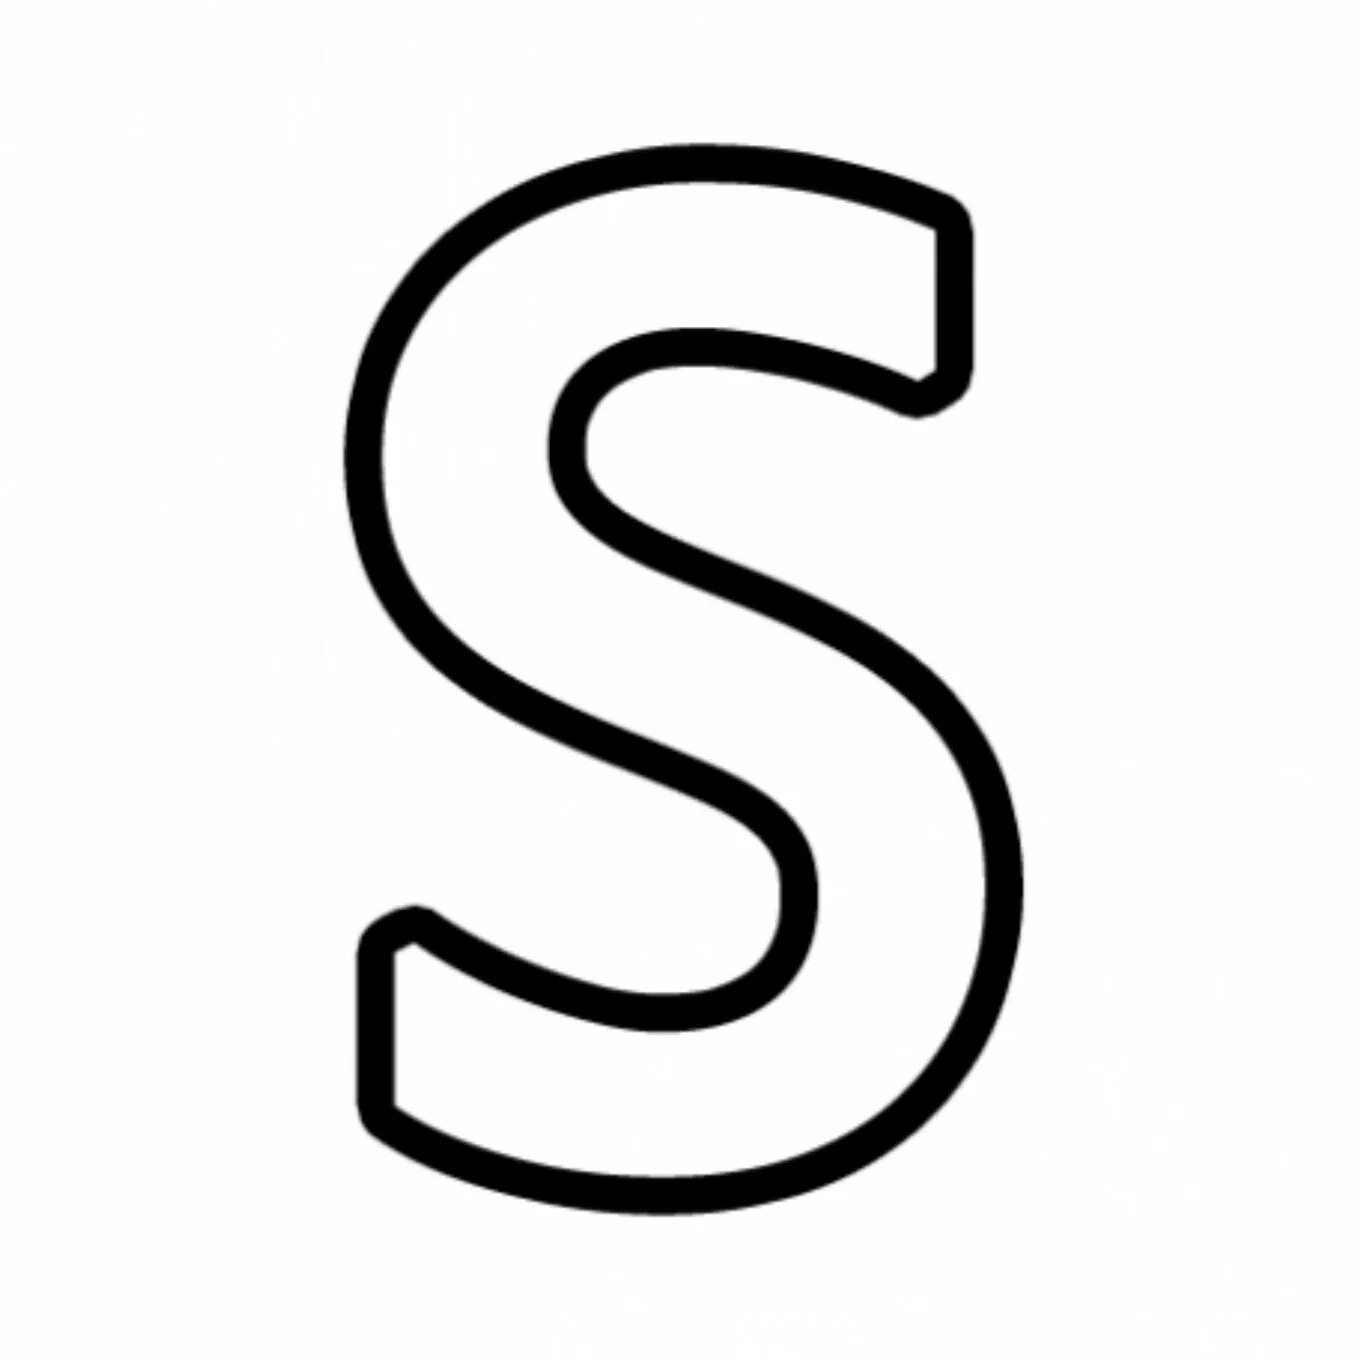 Буква s. Трафарет буквы s. Английская буква s. Буква s без фона.